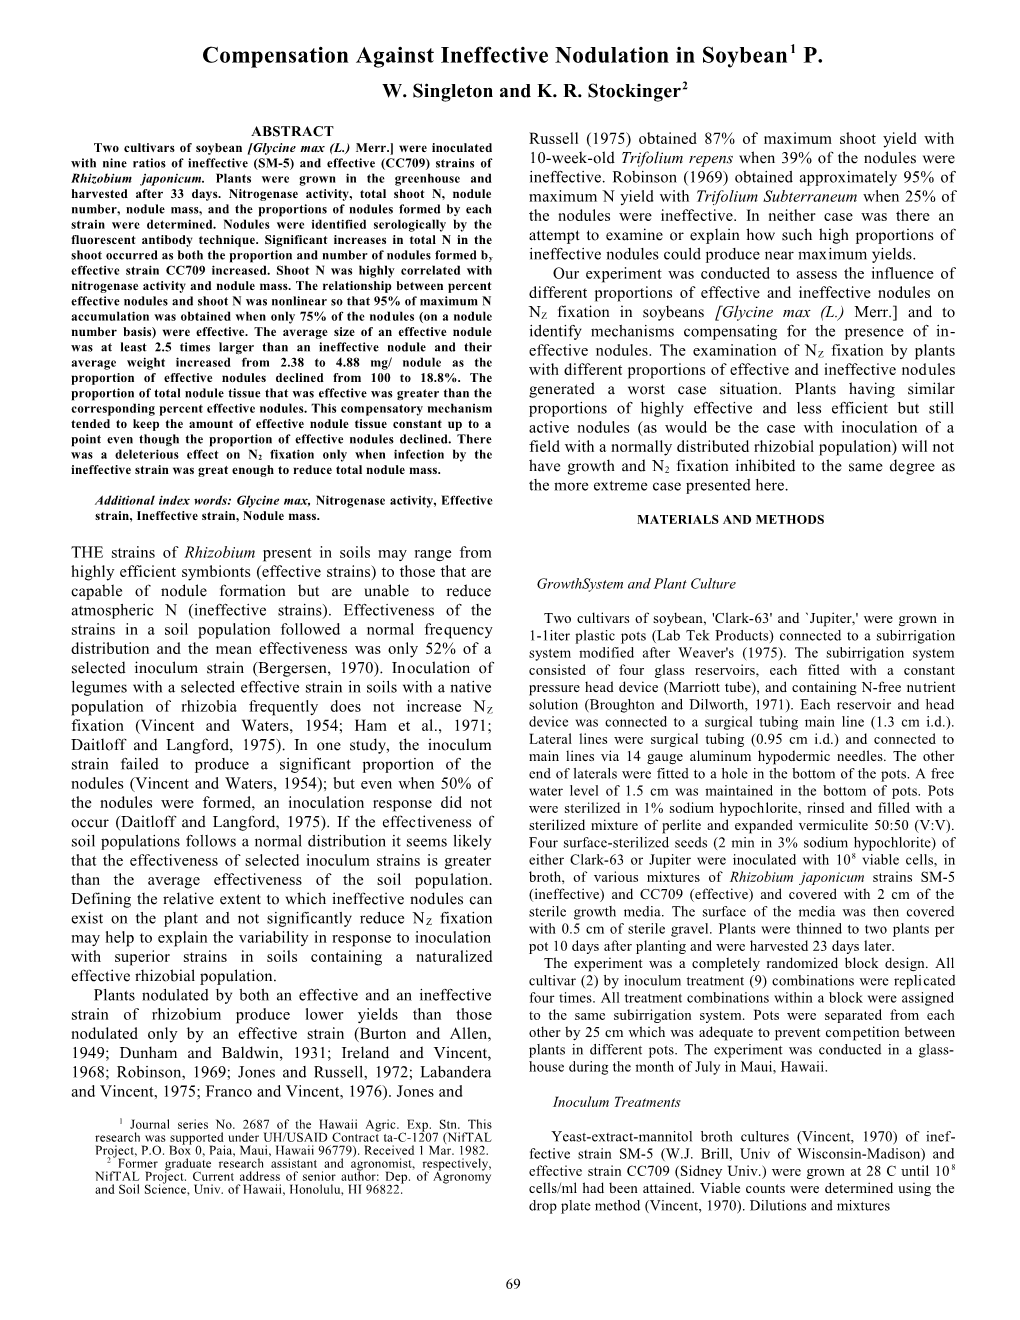 Compensation Against Ineffective Nodulation in Soybean1p. W. Singleton and K. R. Stockinger2